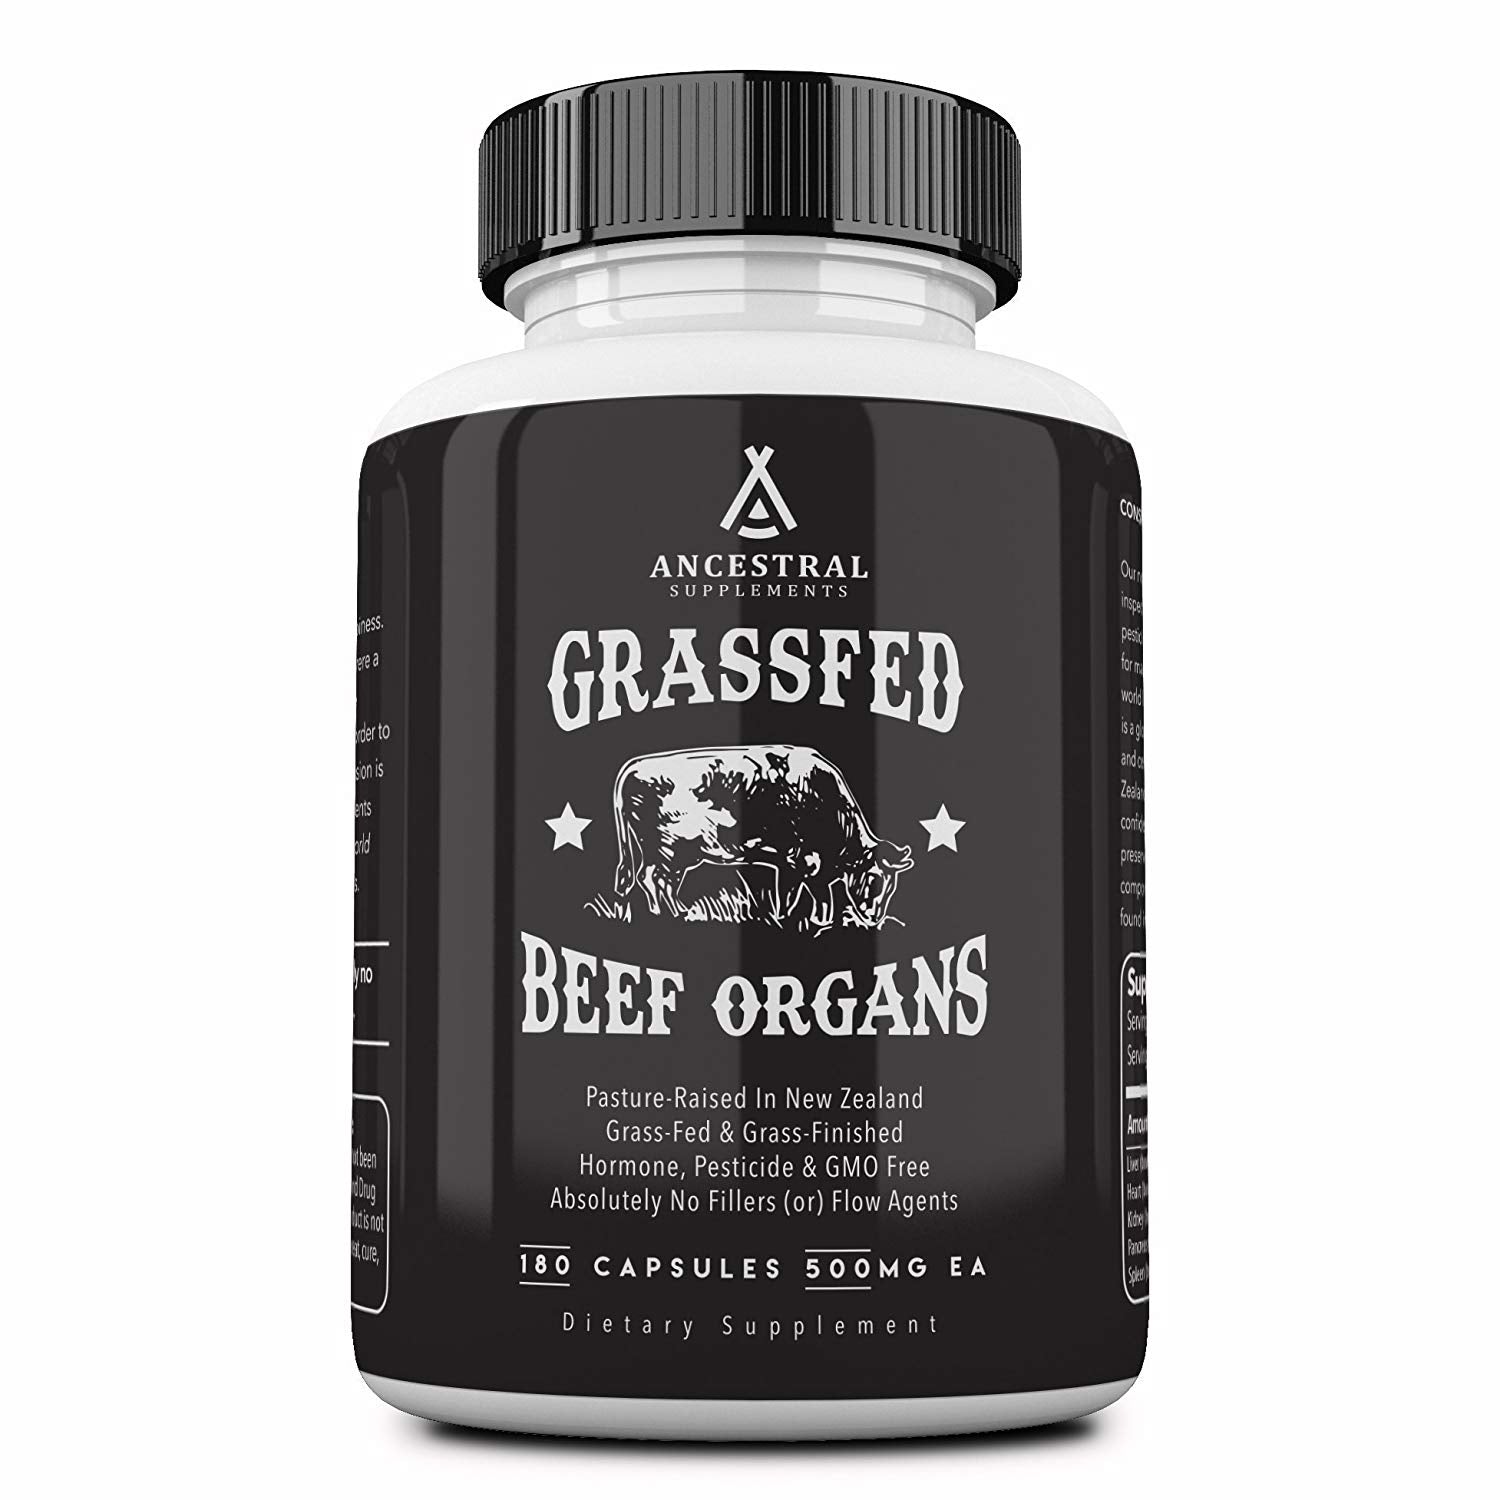 Grassfed Beef Organs - 180 capsules 